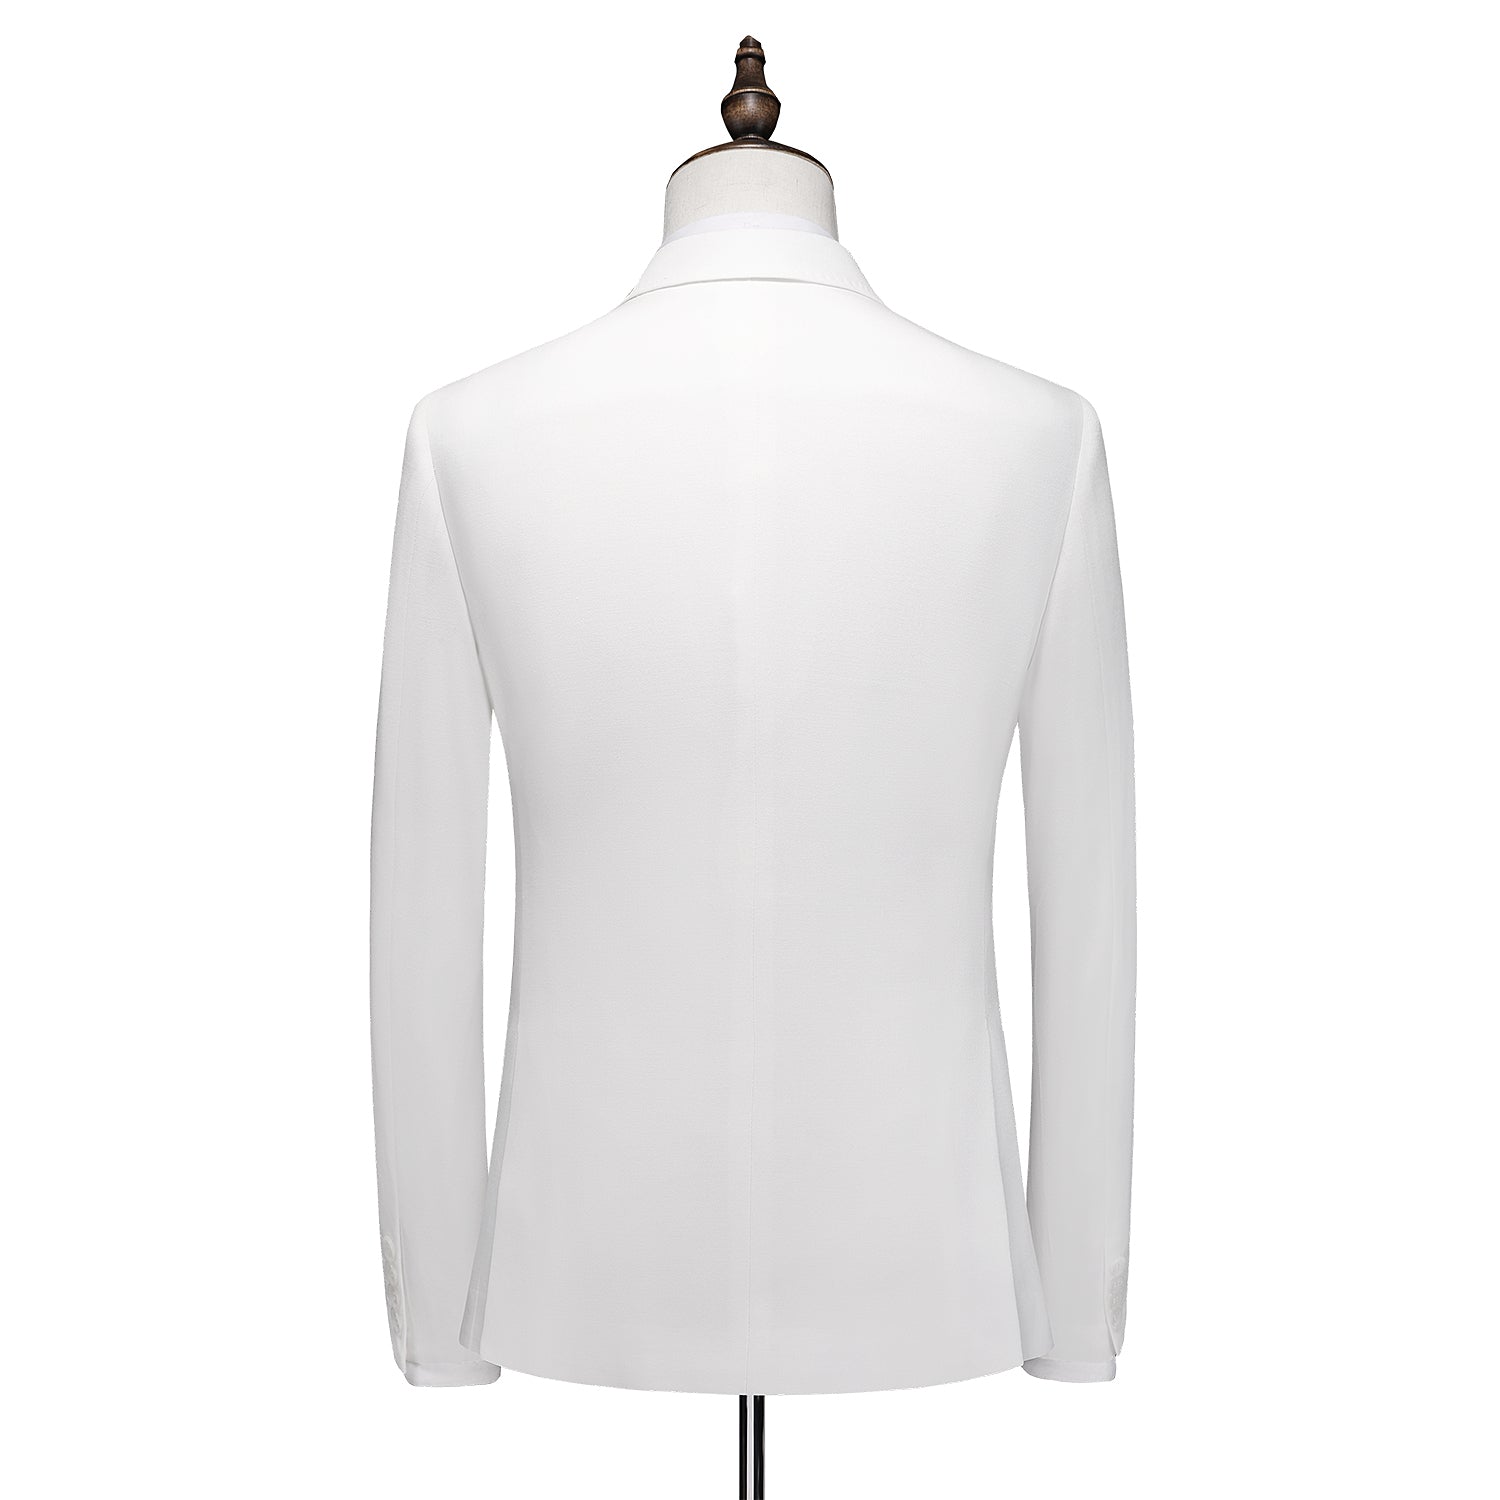 Men's Blazer Coat in Solid White One Button Jacket